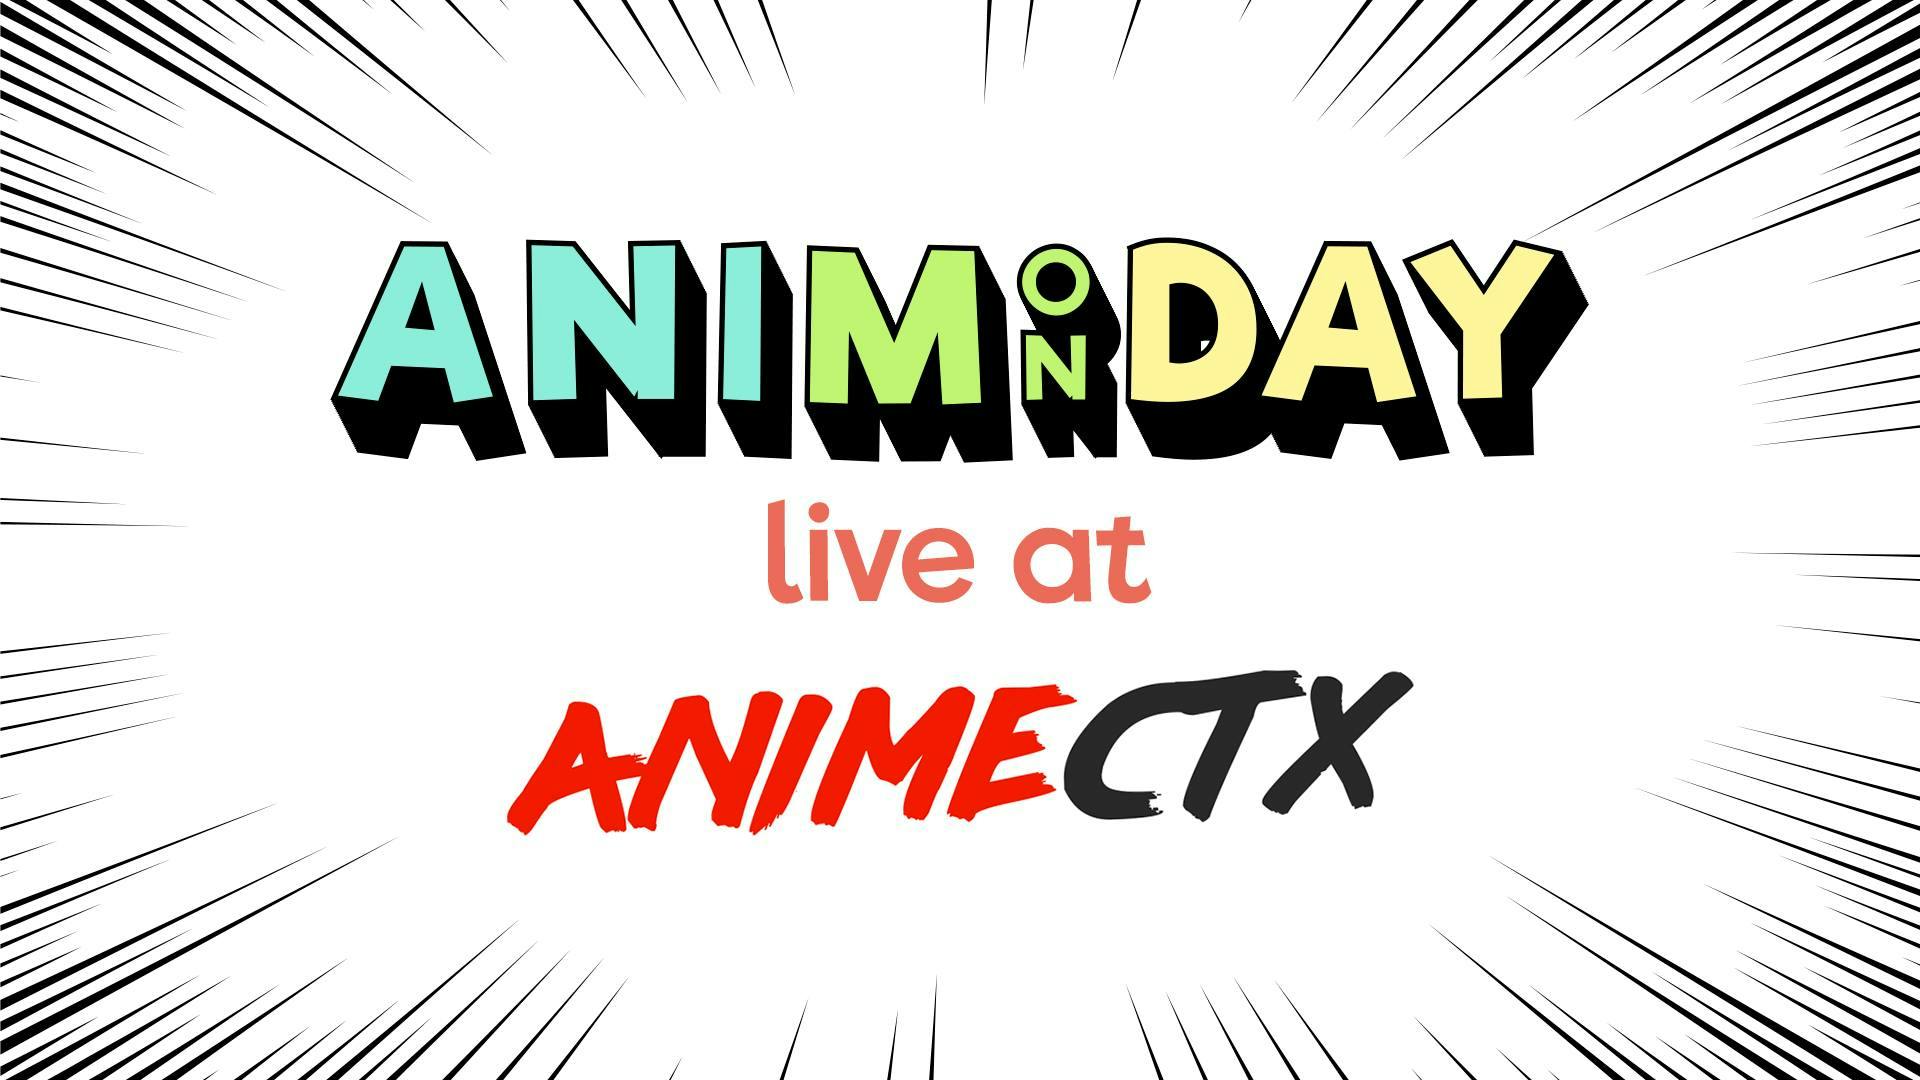 AniMonday Live at AnimeCTX